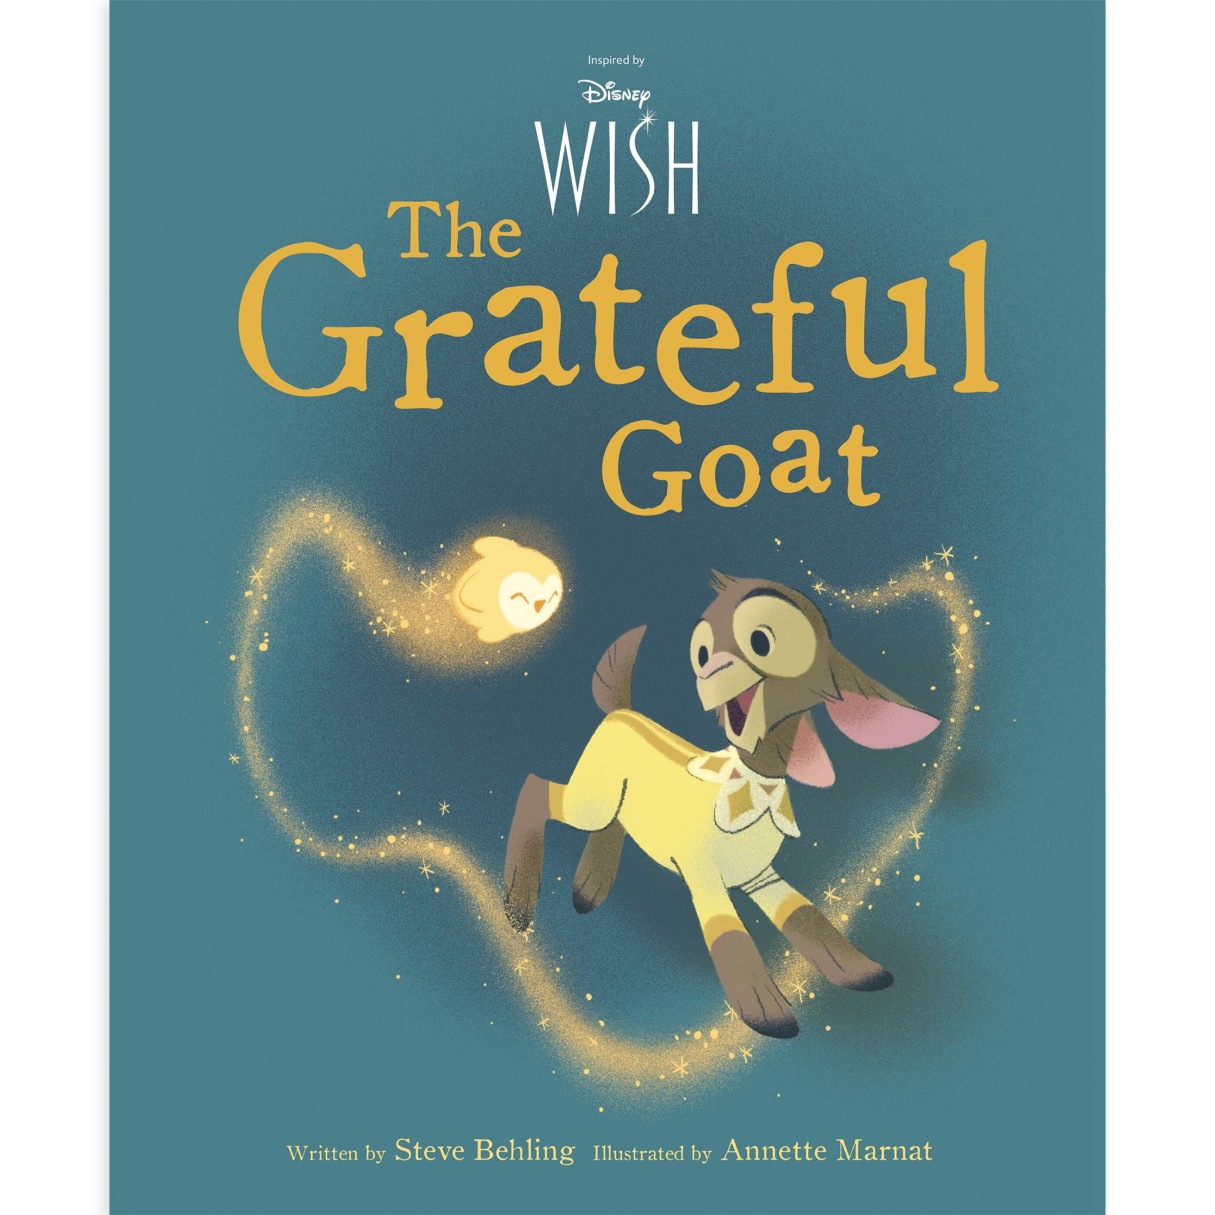 The Grateful Goat Book – Wish